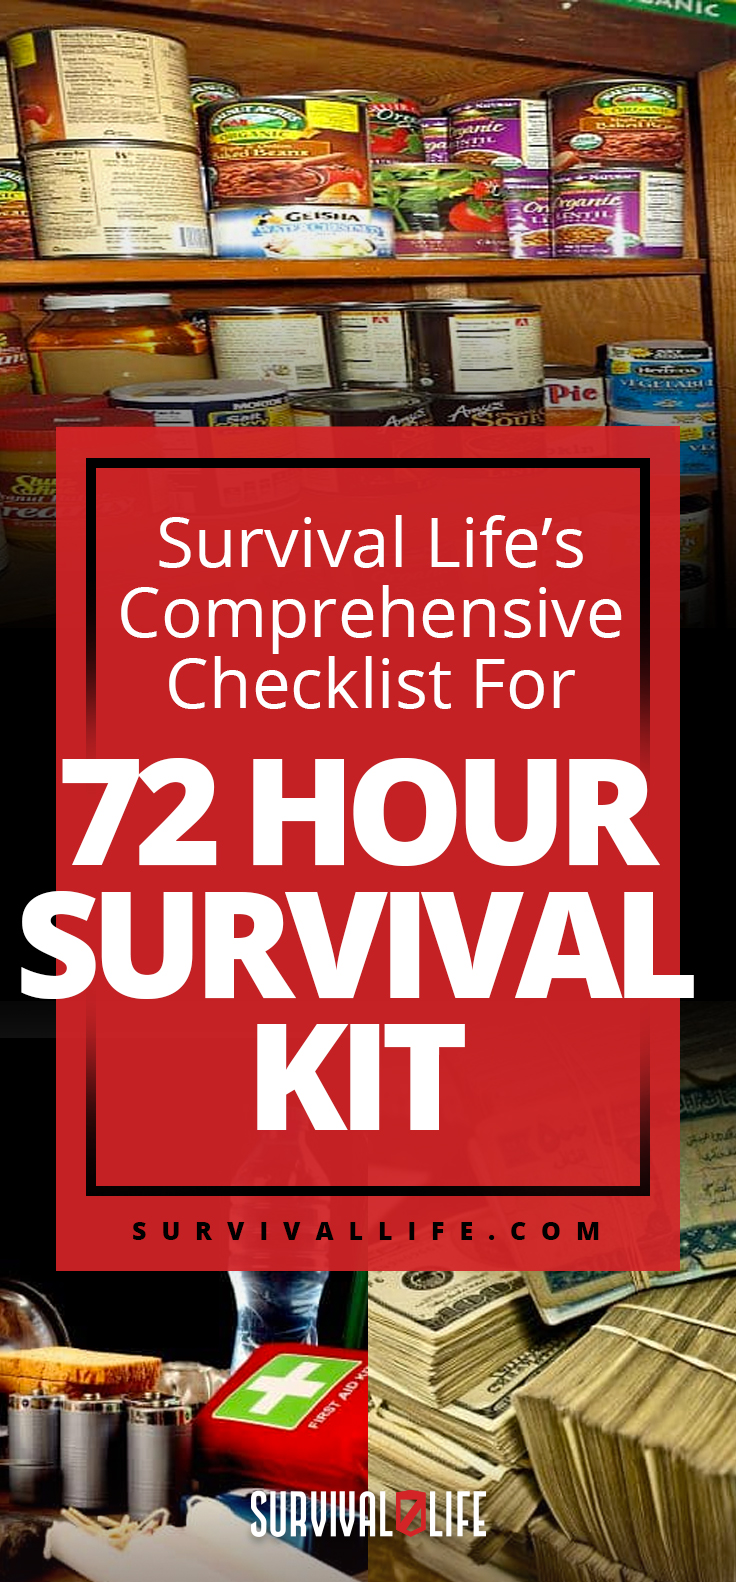 Survival Life's Comprehensive Checklist For 72 Hour Survival Kit | Bug-Out Kit